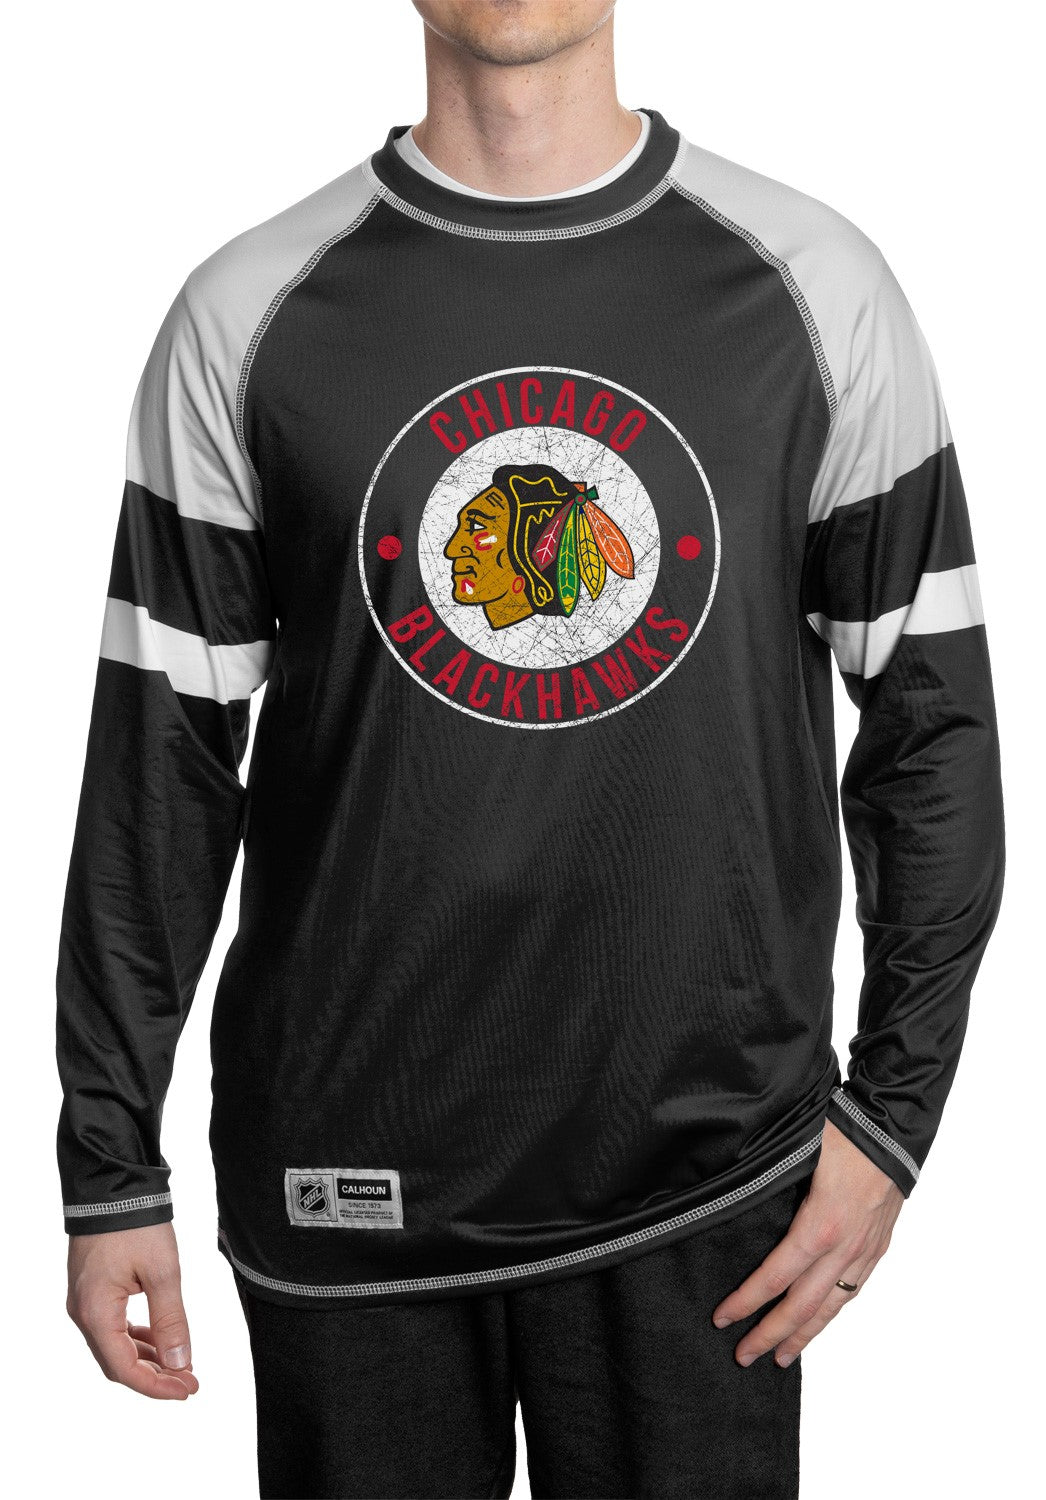 Chicago Blackhawks Thermal Long Sleeve Rash Guard Shirt